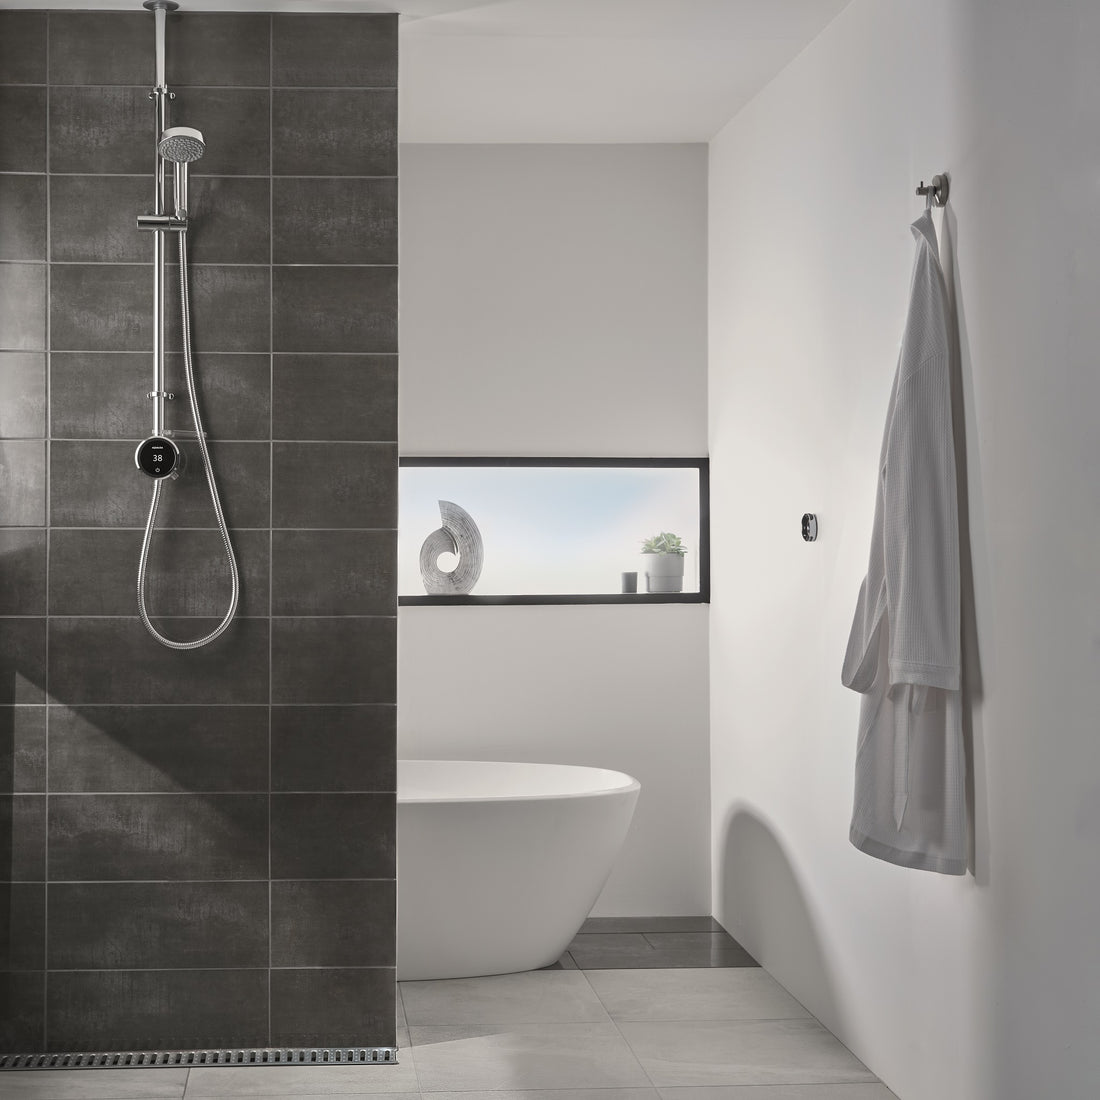 Aqualisa Quartz Touch Smart Shower - Exposed Adjustable Head With Bath Overflow Filler against grey tiling QZST.A1.EV.DVBTX.20